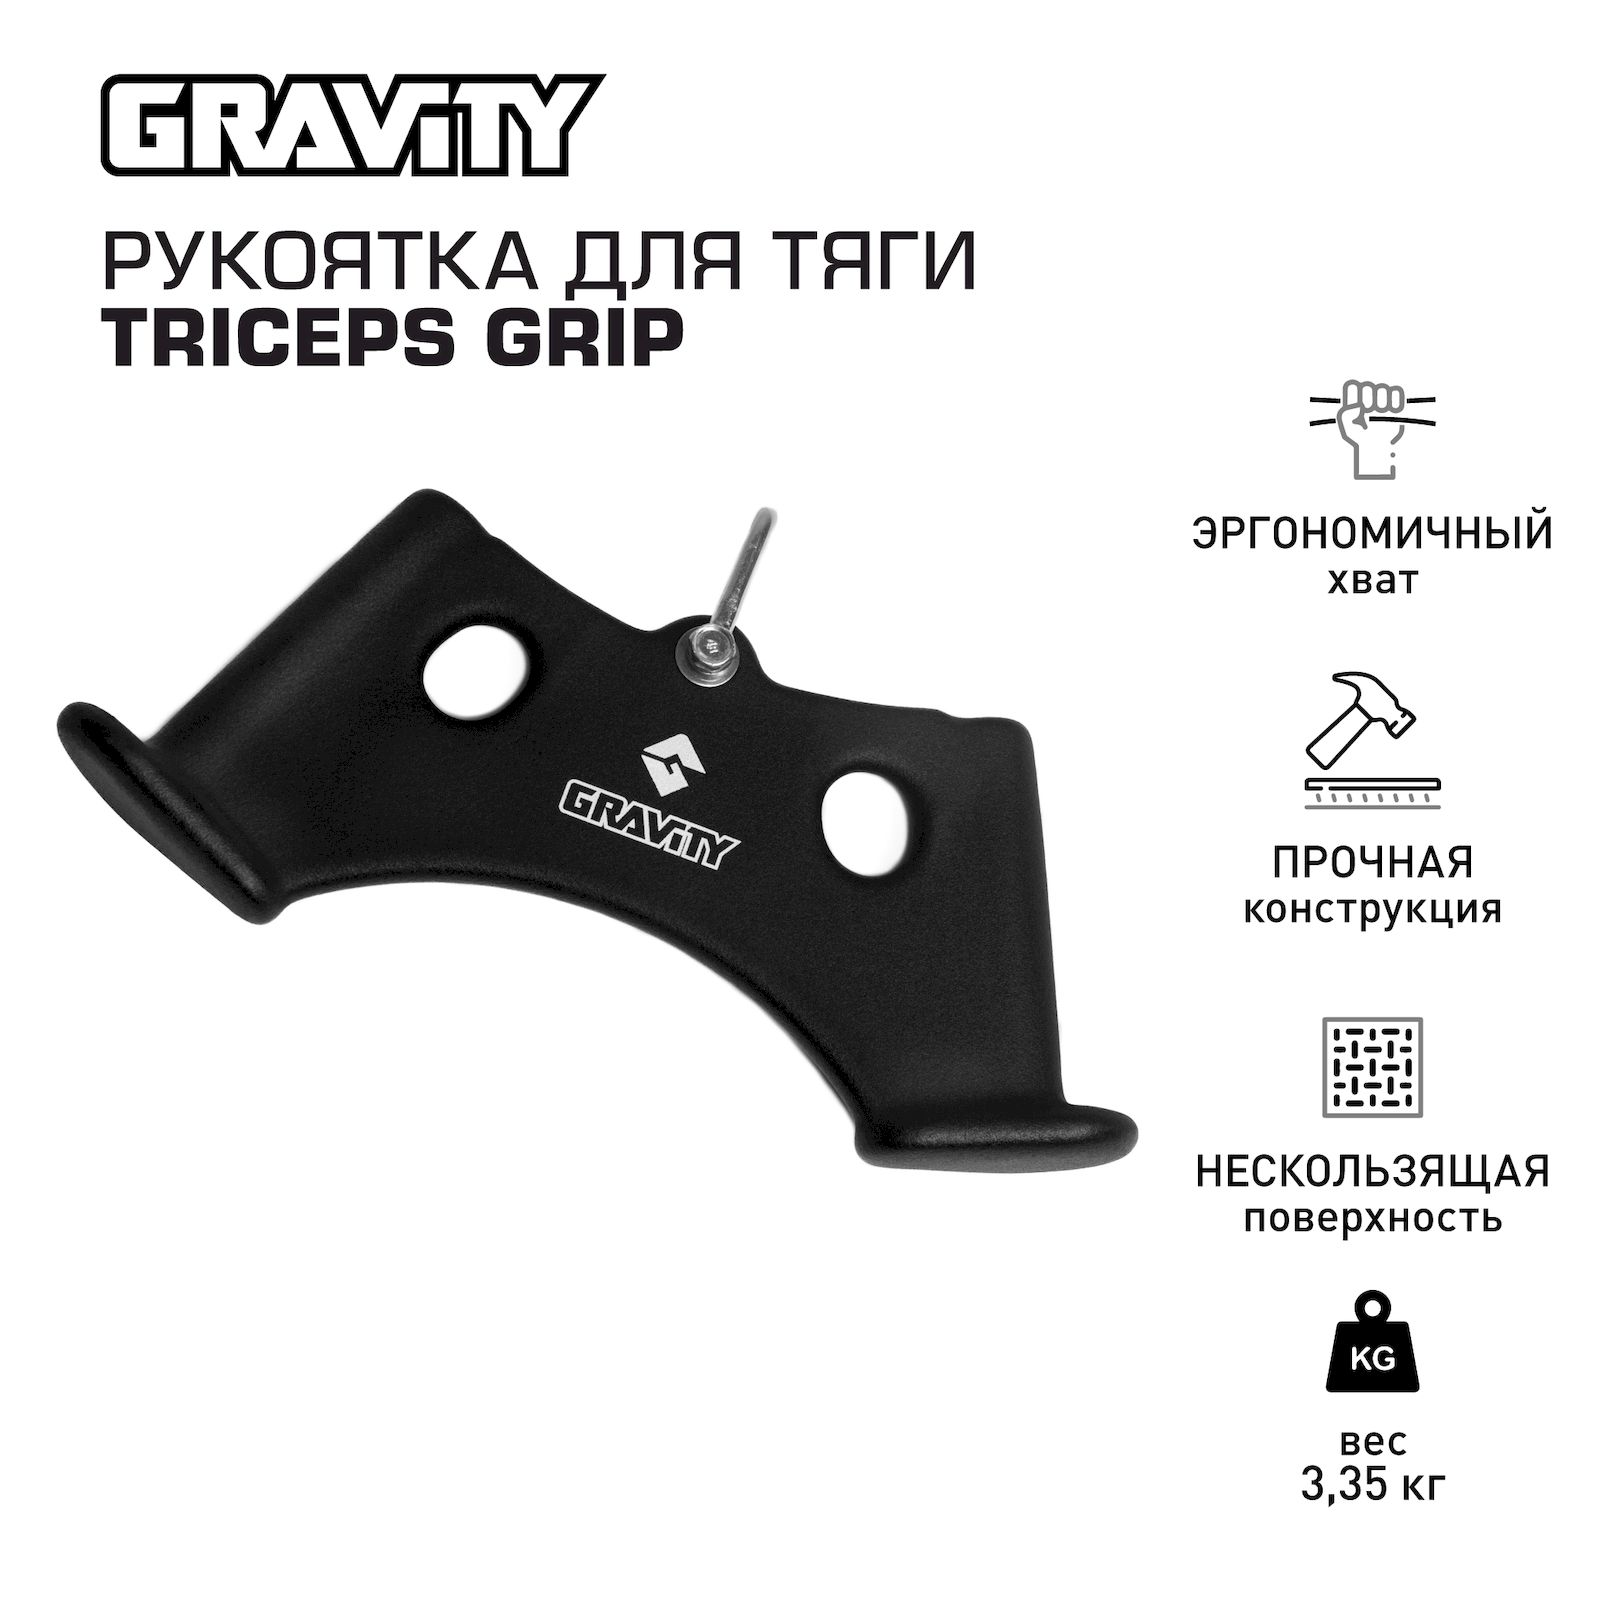 Рукоятка для тяги Gravity TRICEPS GRIP